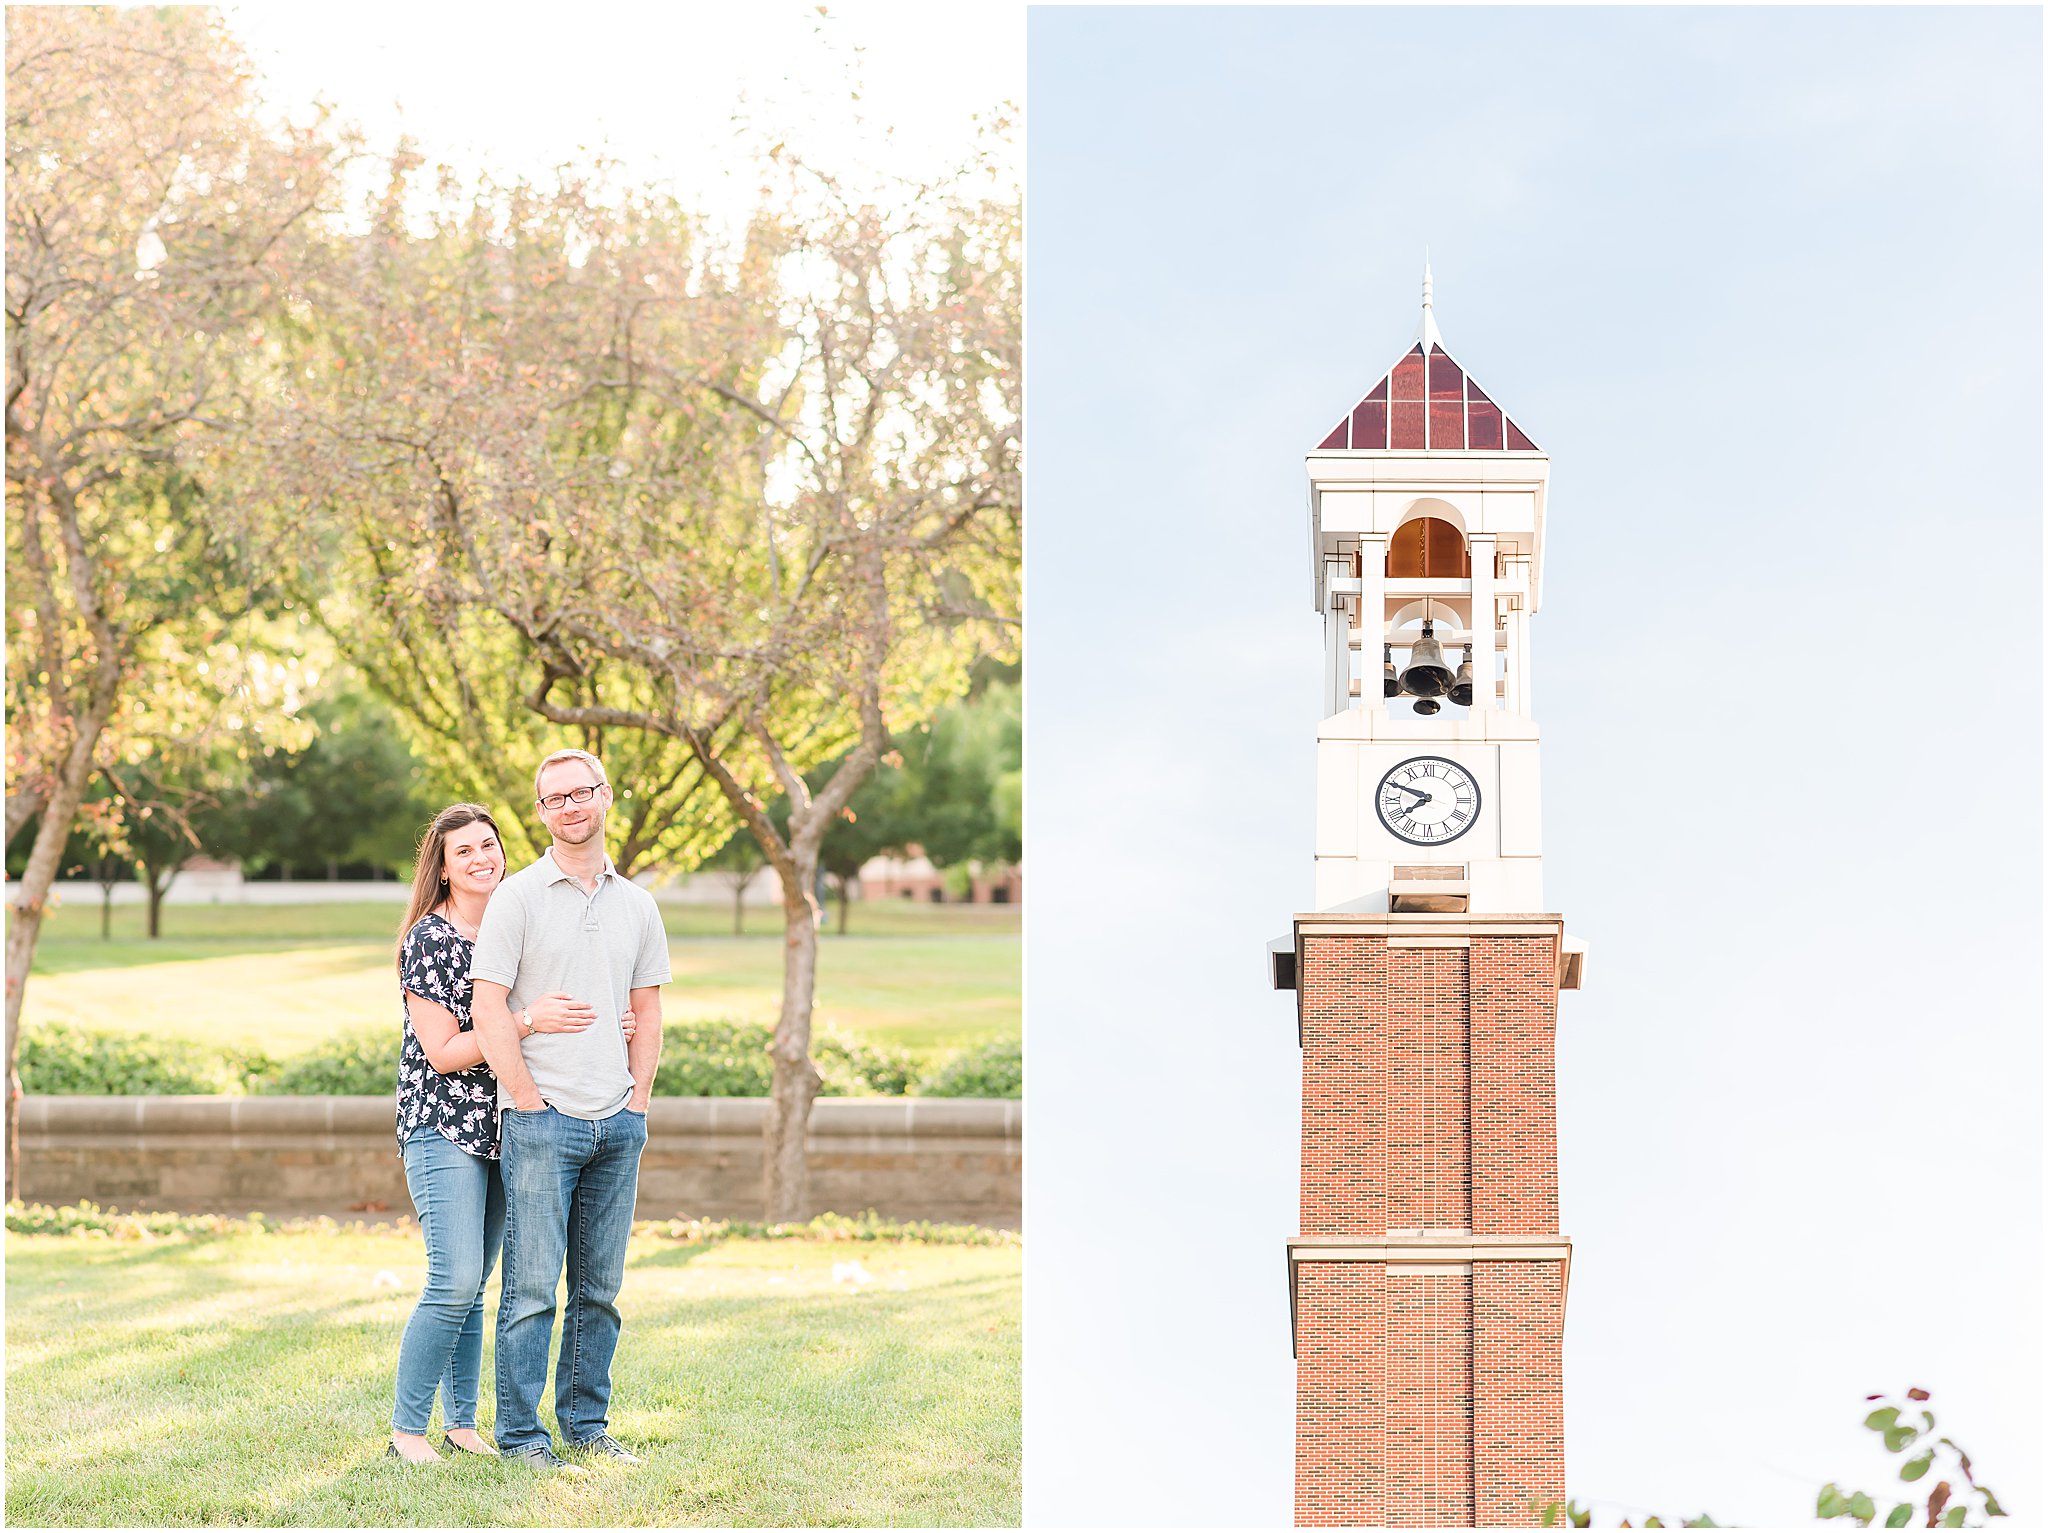 Purdue University bell tower